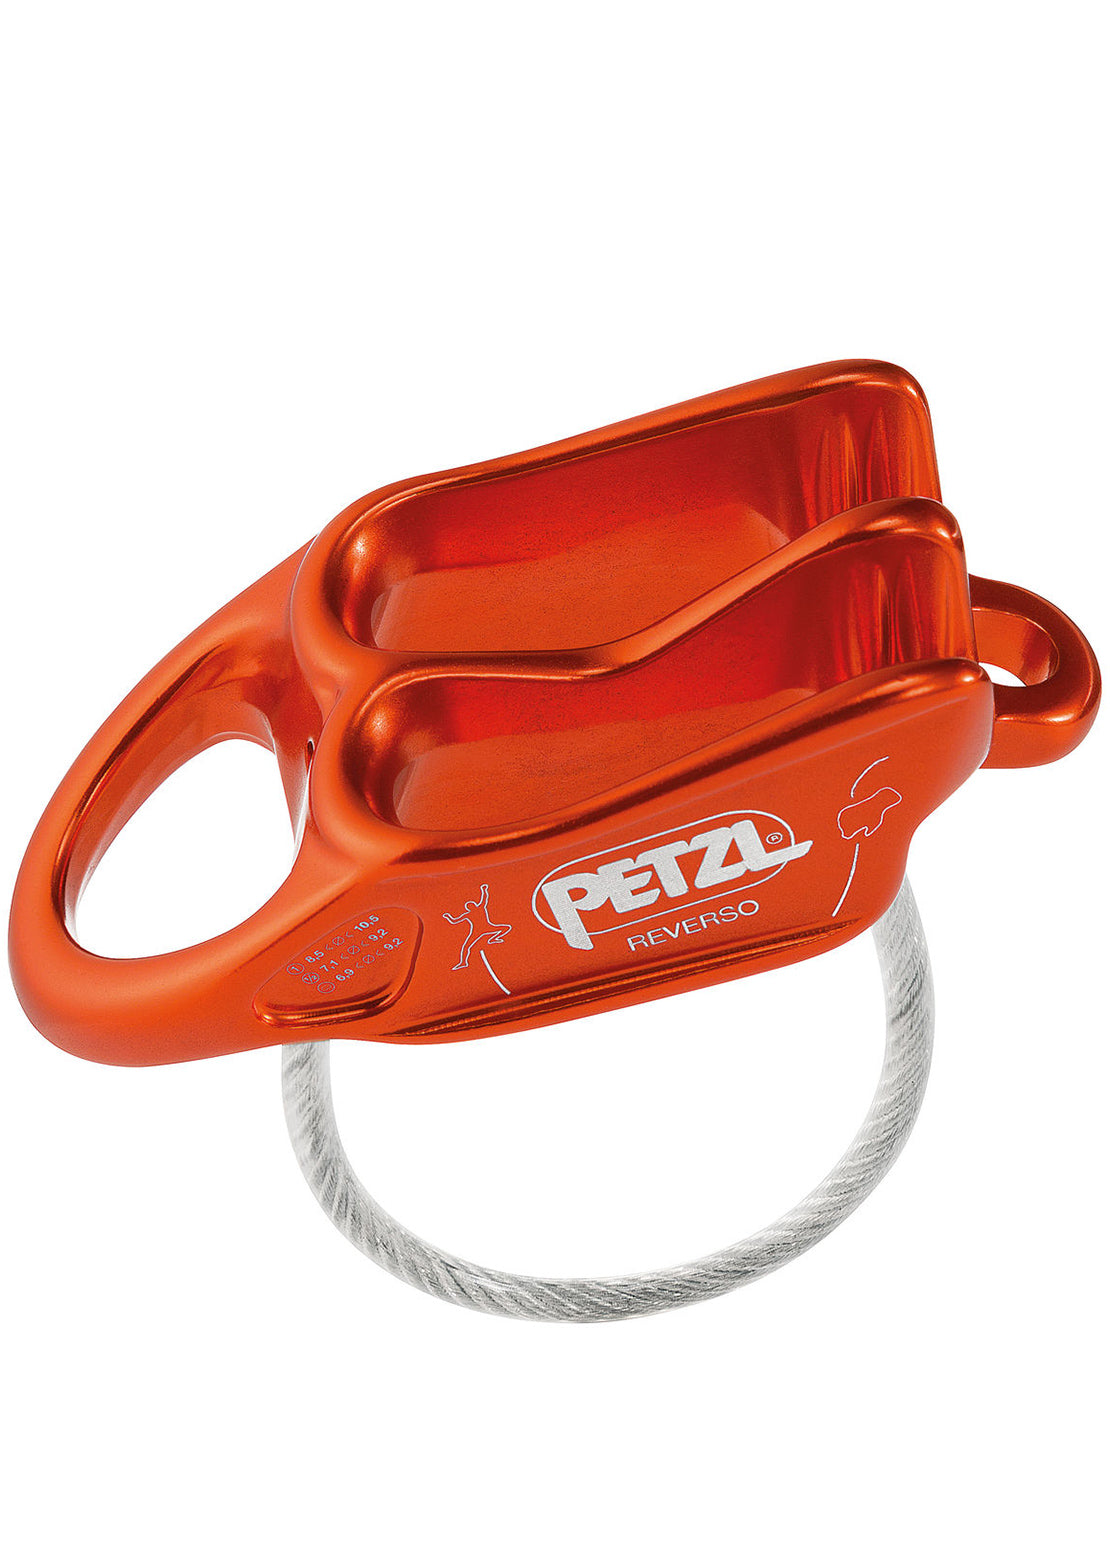 Petzl Reverso Belay Device Red/Orange